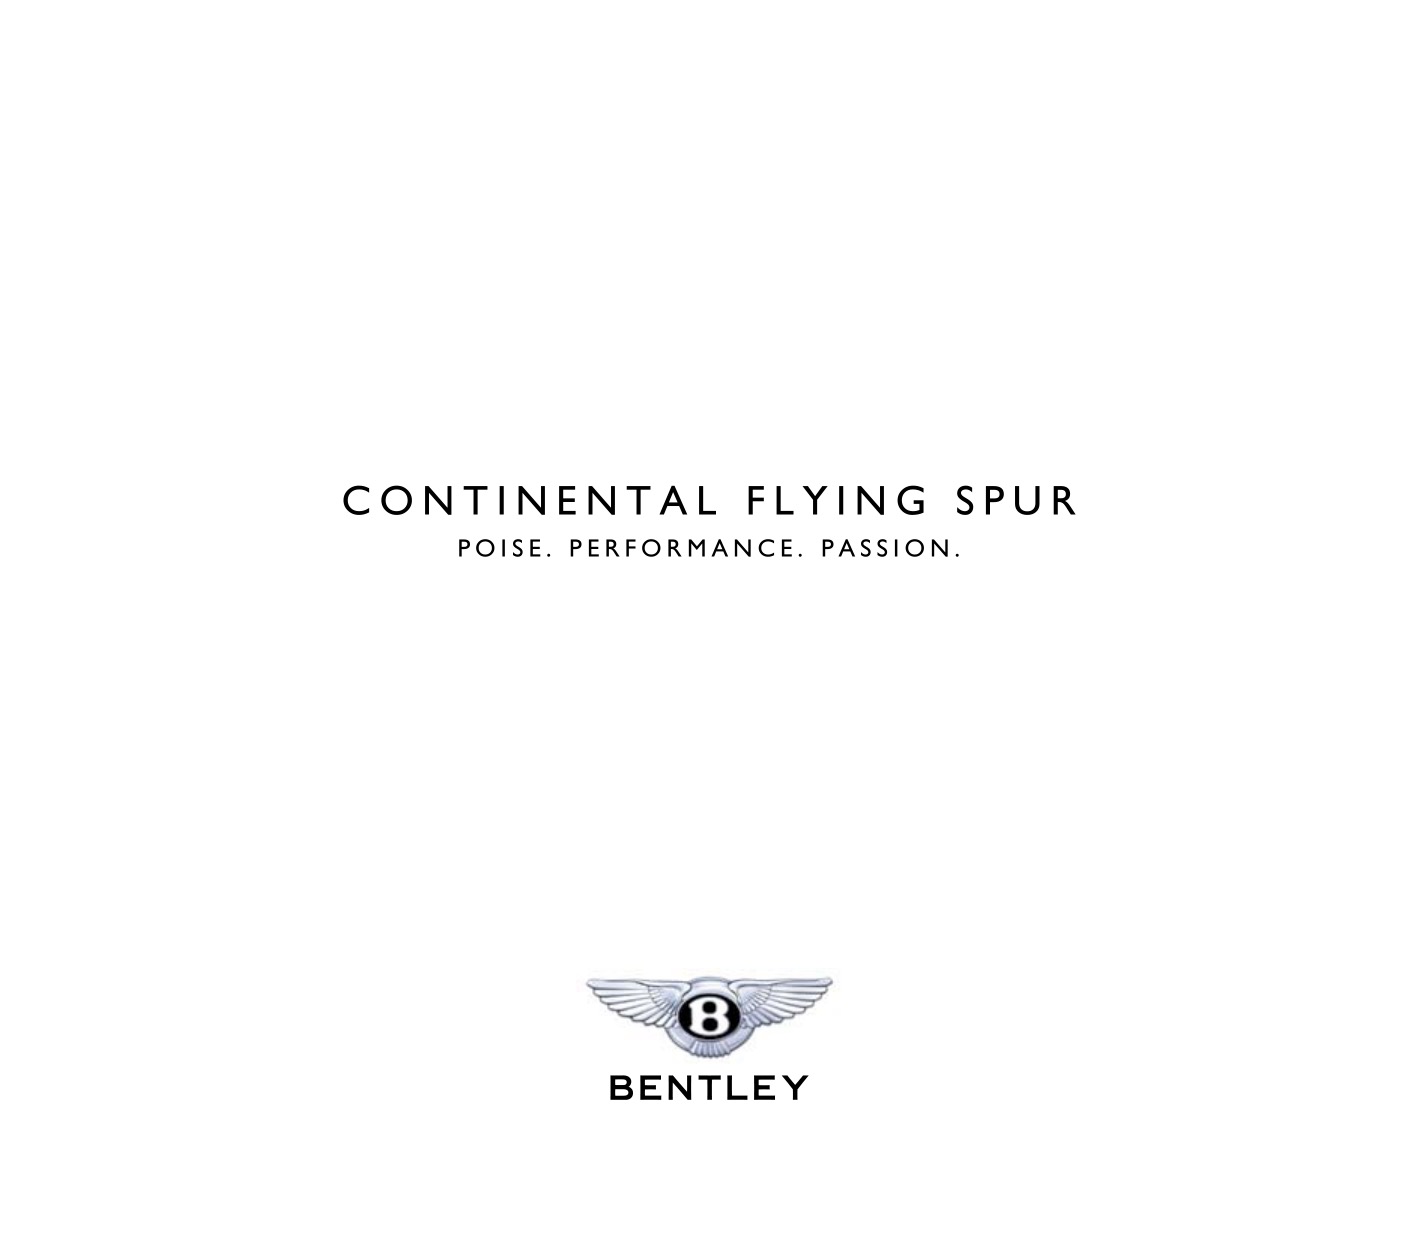 2007 Bentley Continental Flying Spur Brochure